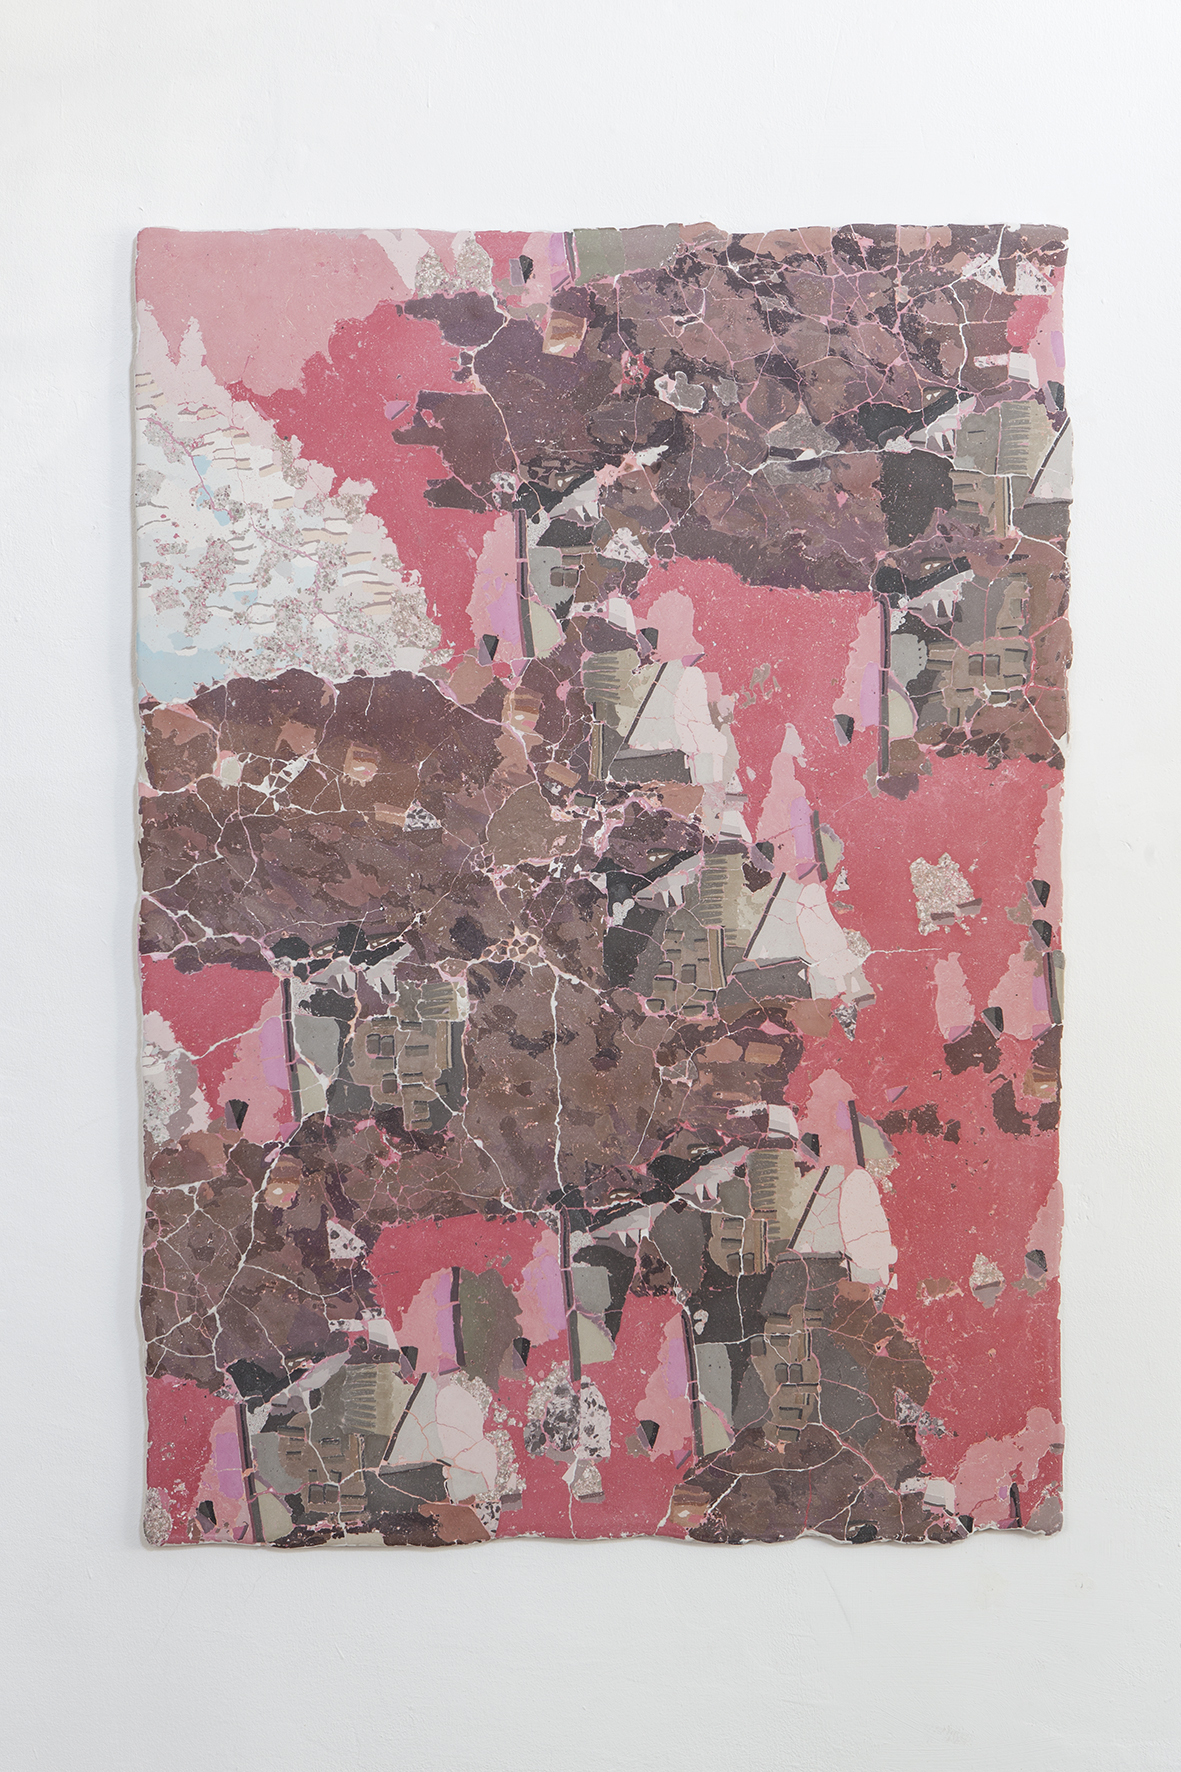 Heti Prack, World Fire, 2021, 142 x 102 cm, Gypsum, pigments, bone glue